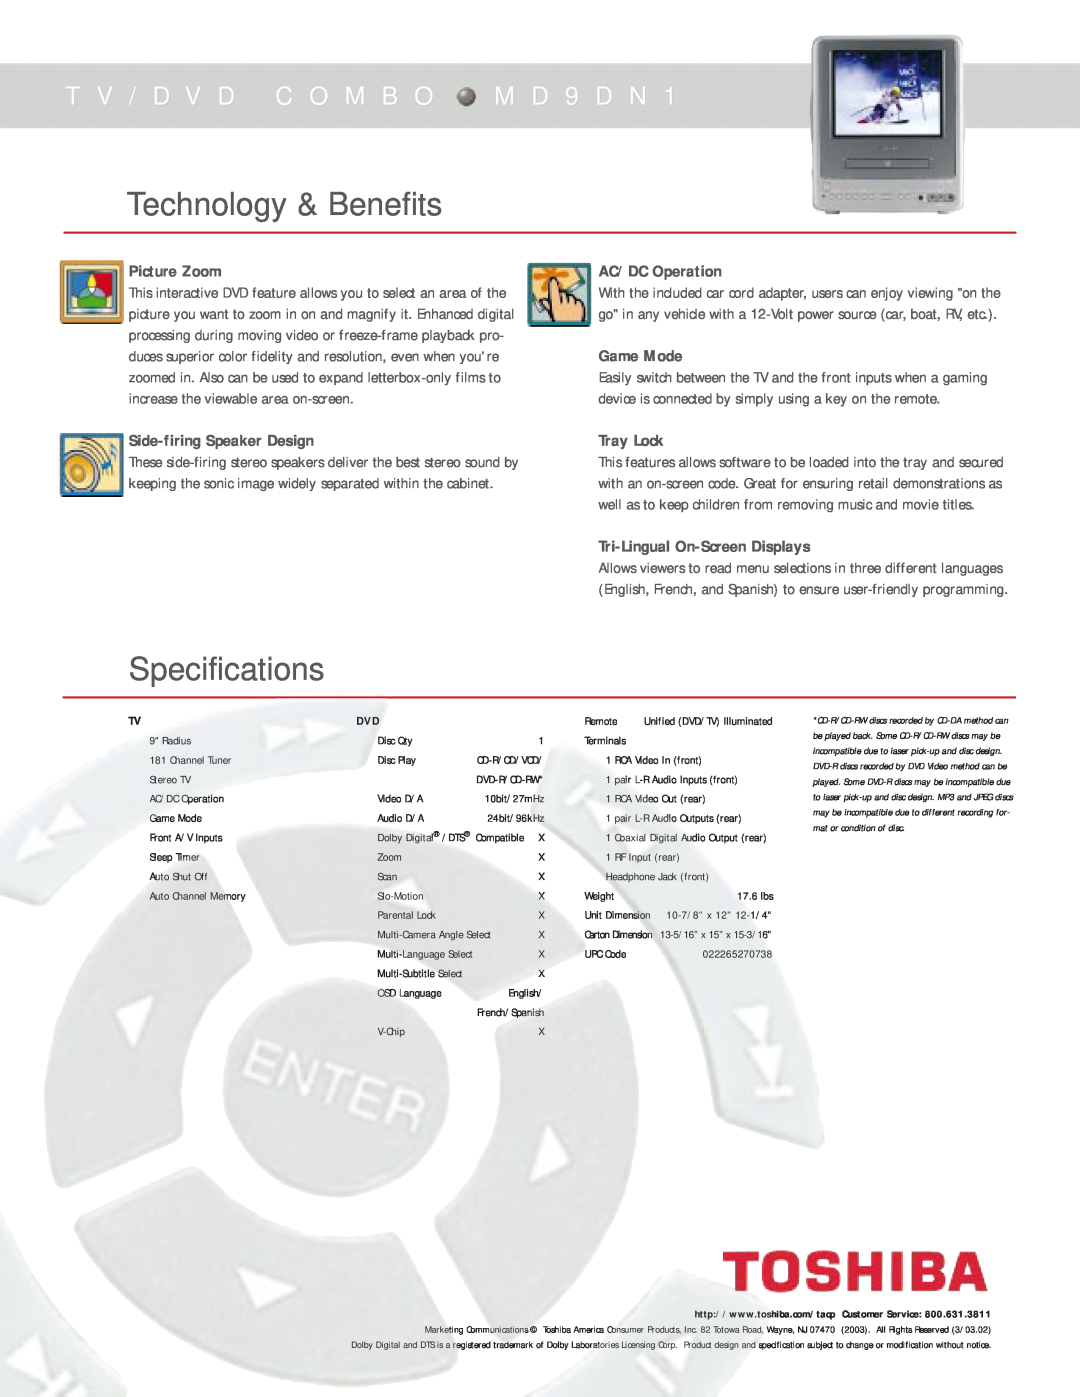 Toshiba MD9DN1 manual Technology & Benefits, Specifications, T V / D V D C O M B O M D 9 D N, Picture Zoom, AC/DC Operation 